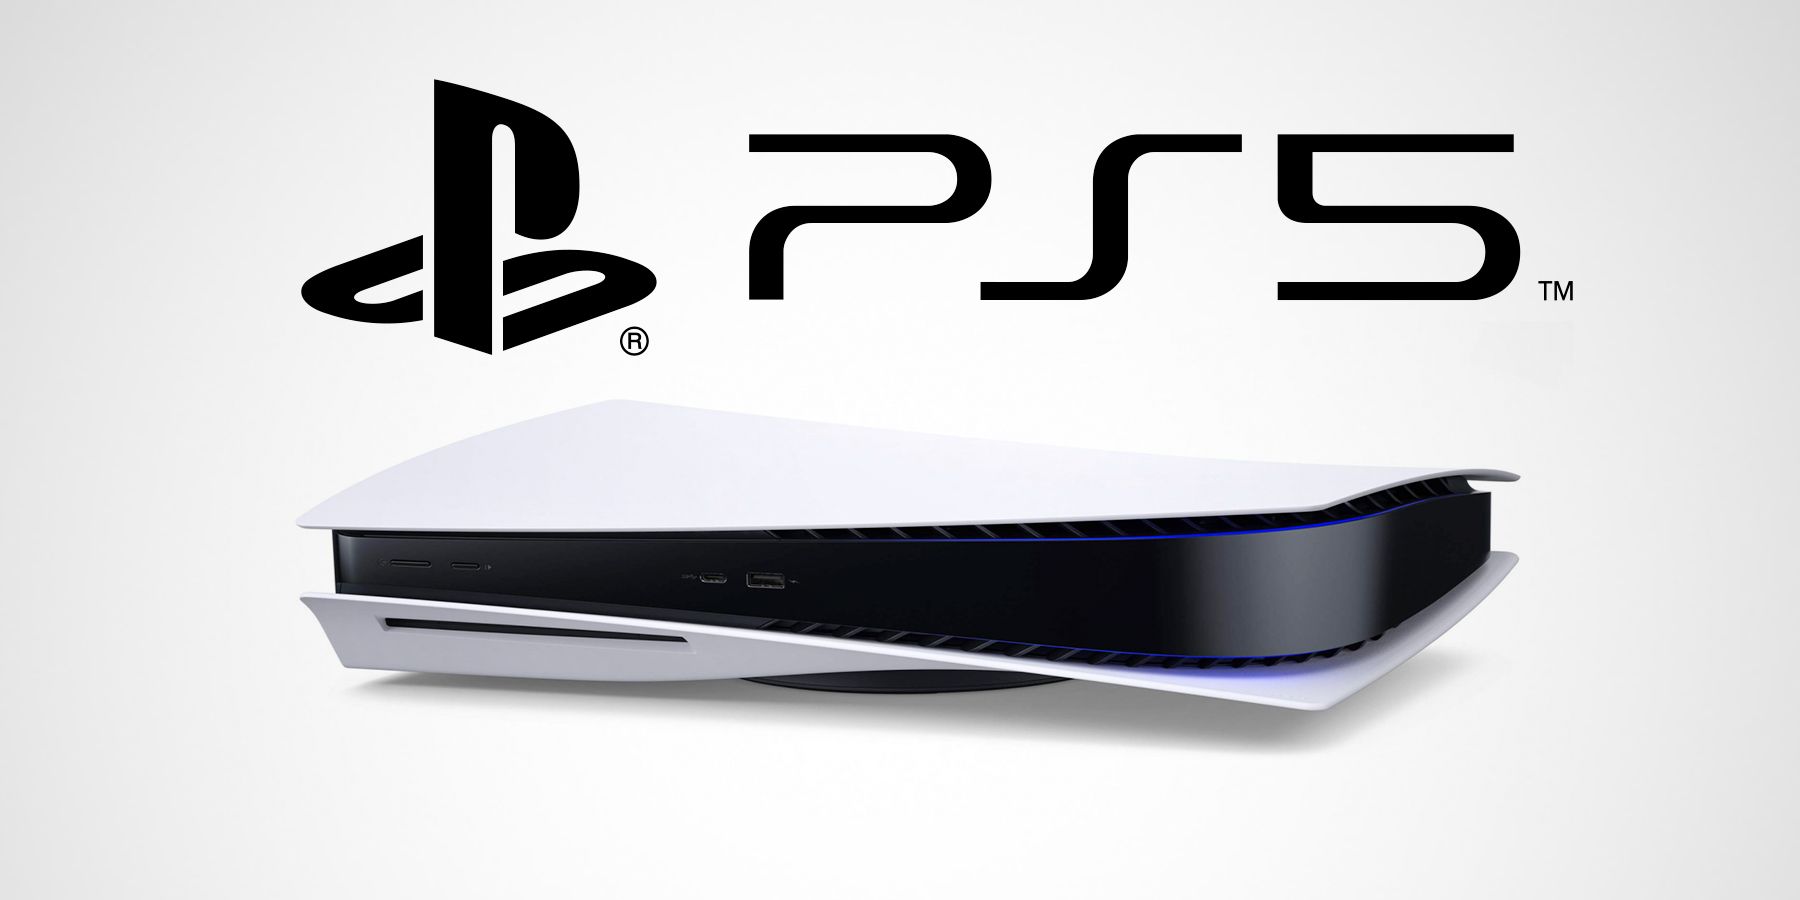 PS5 Slim secrets revealed in teardown videos: Modular potential